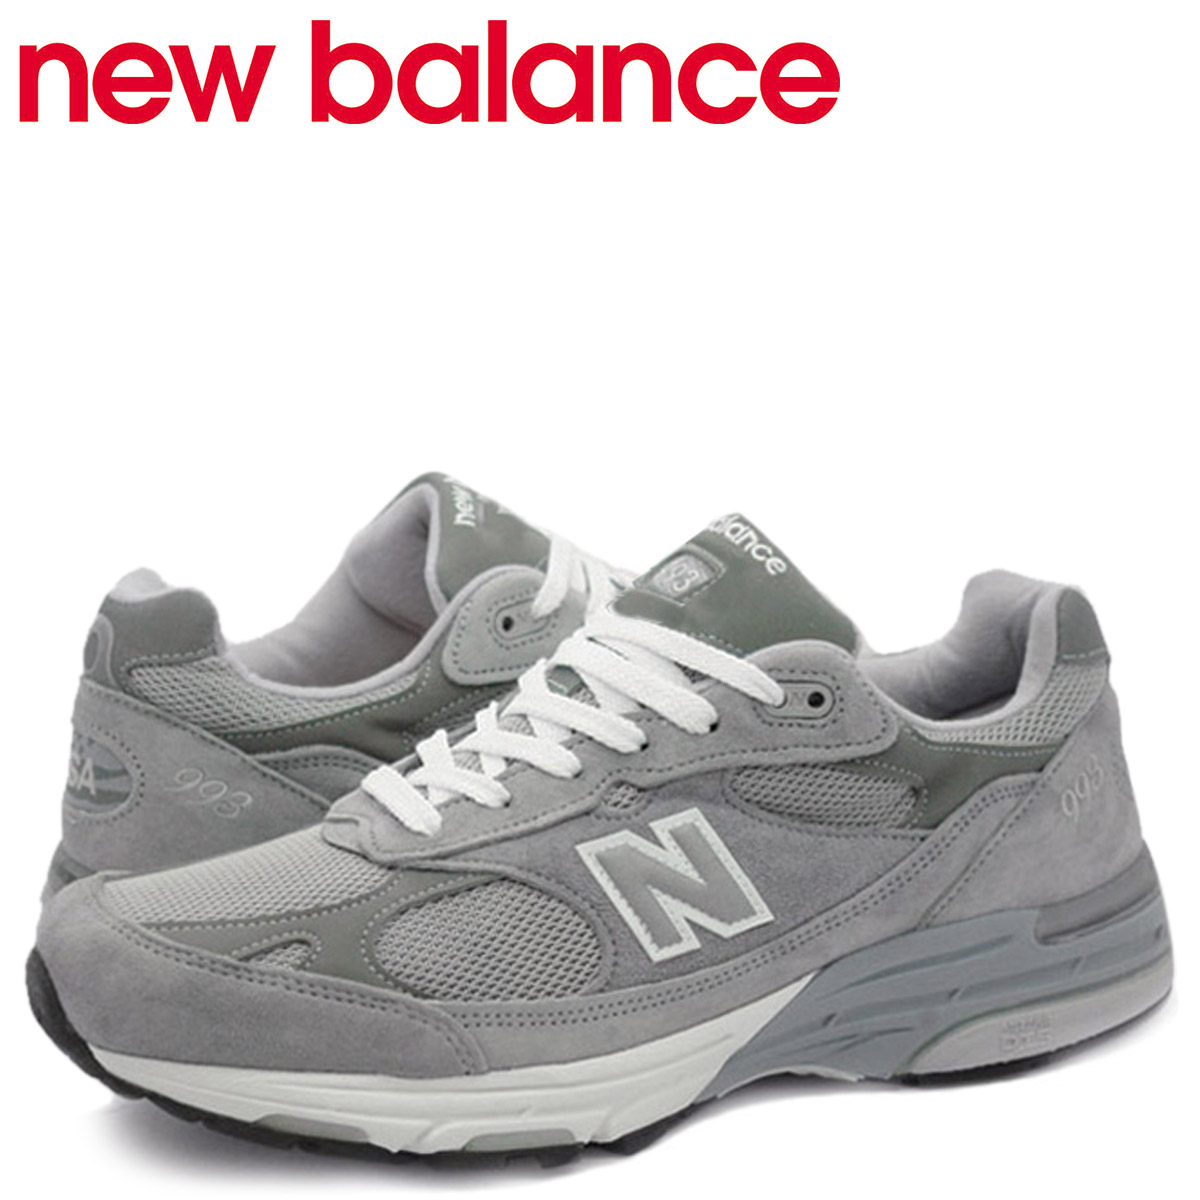 new balance 993 mens shoes